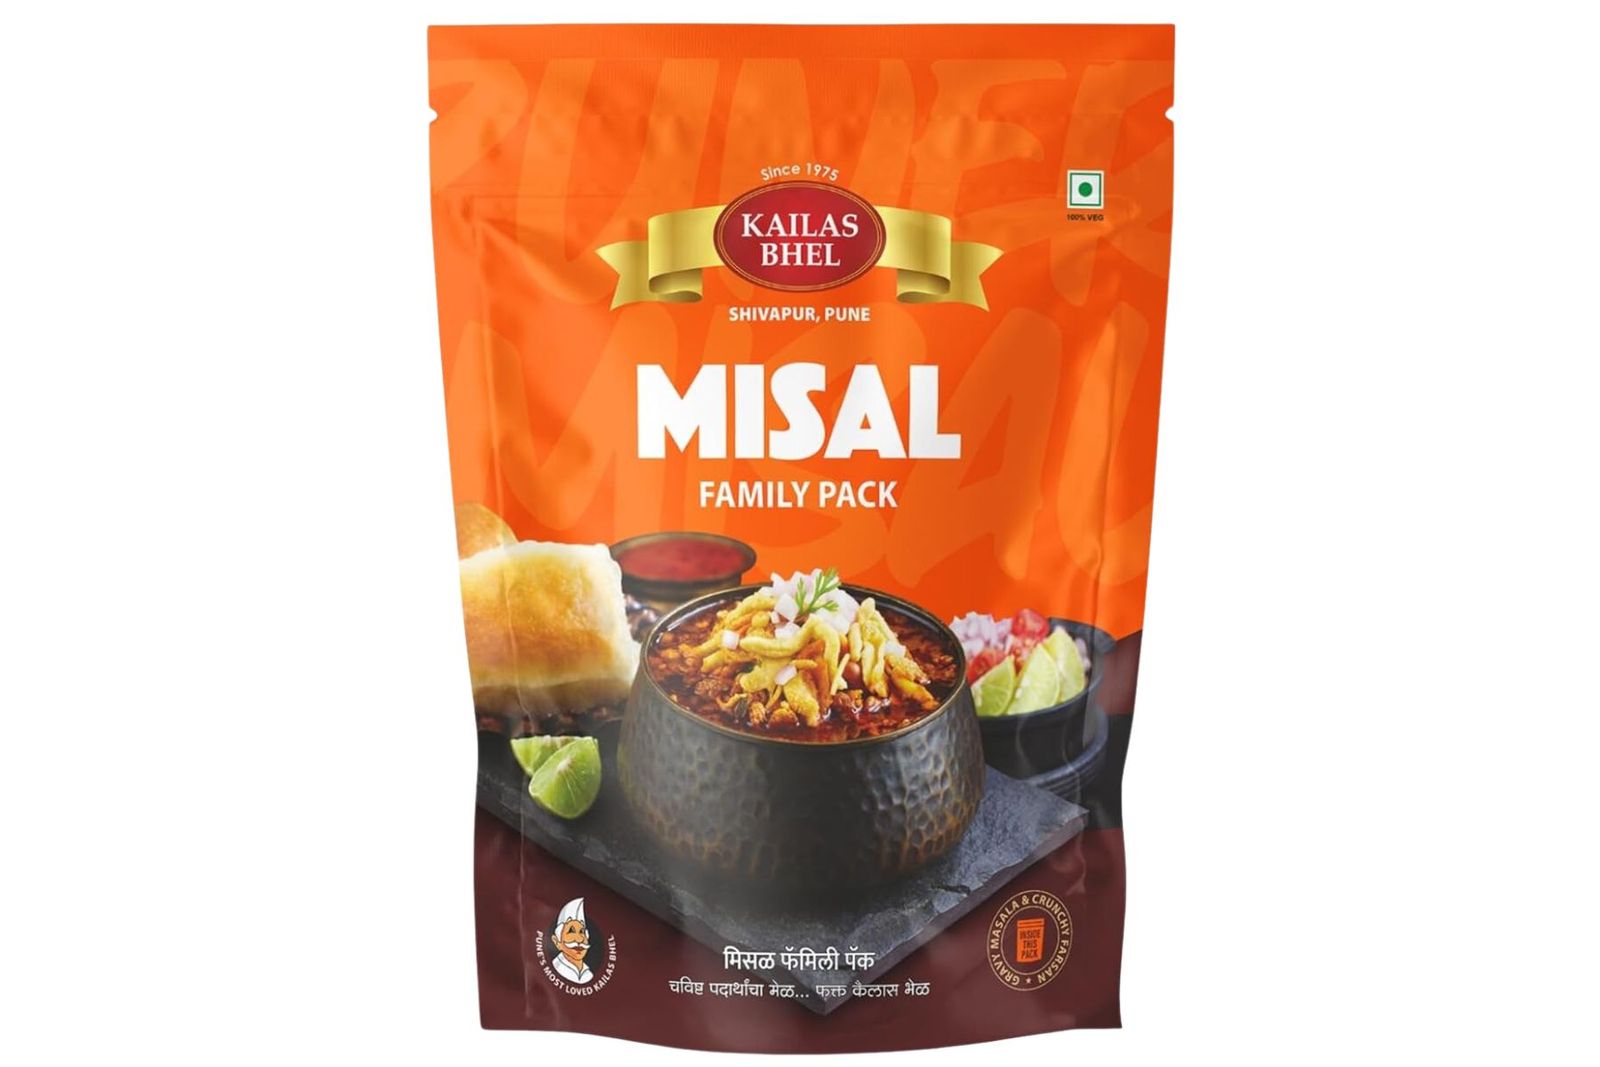 Kailas Bhel Misal Family Pack